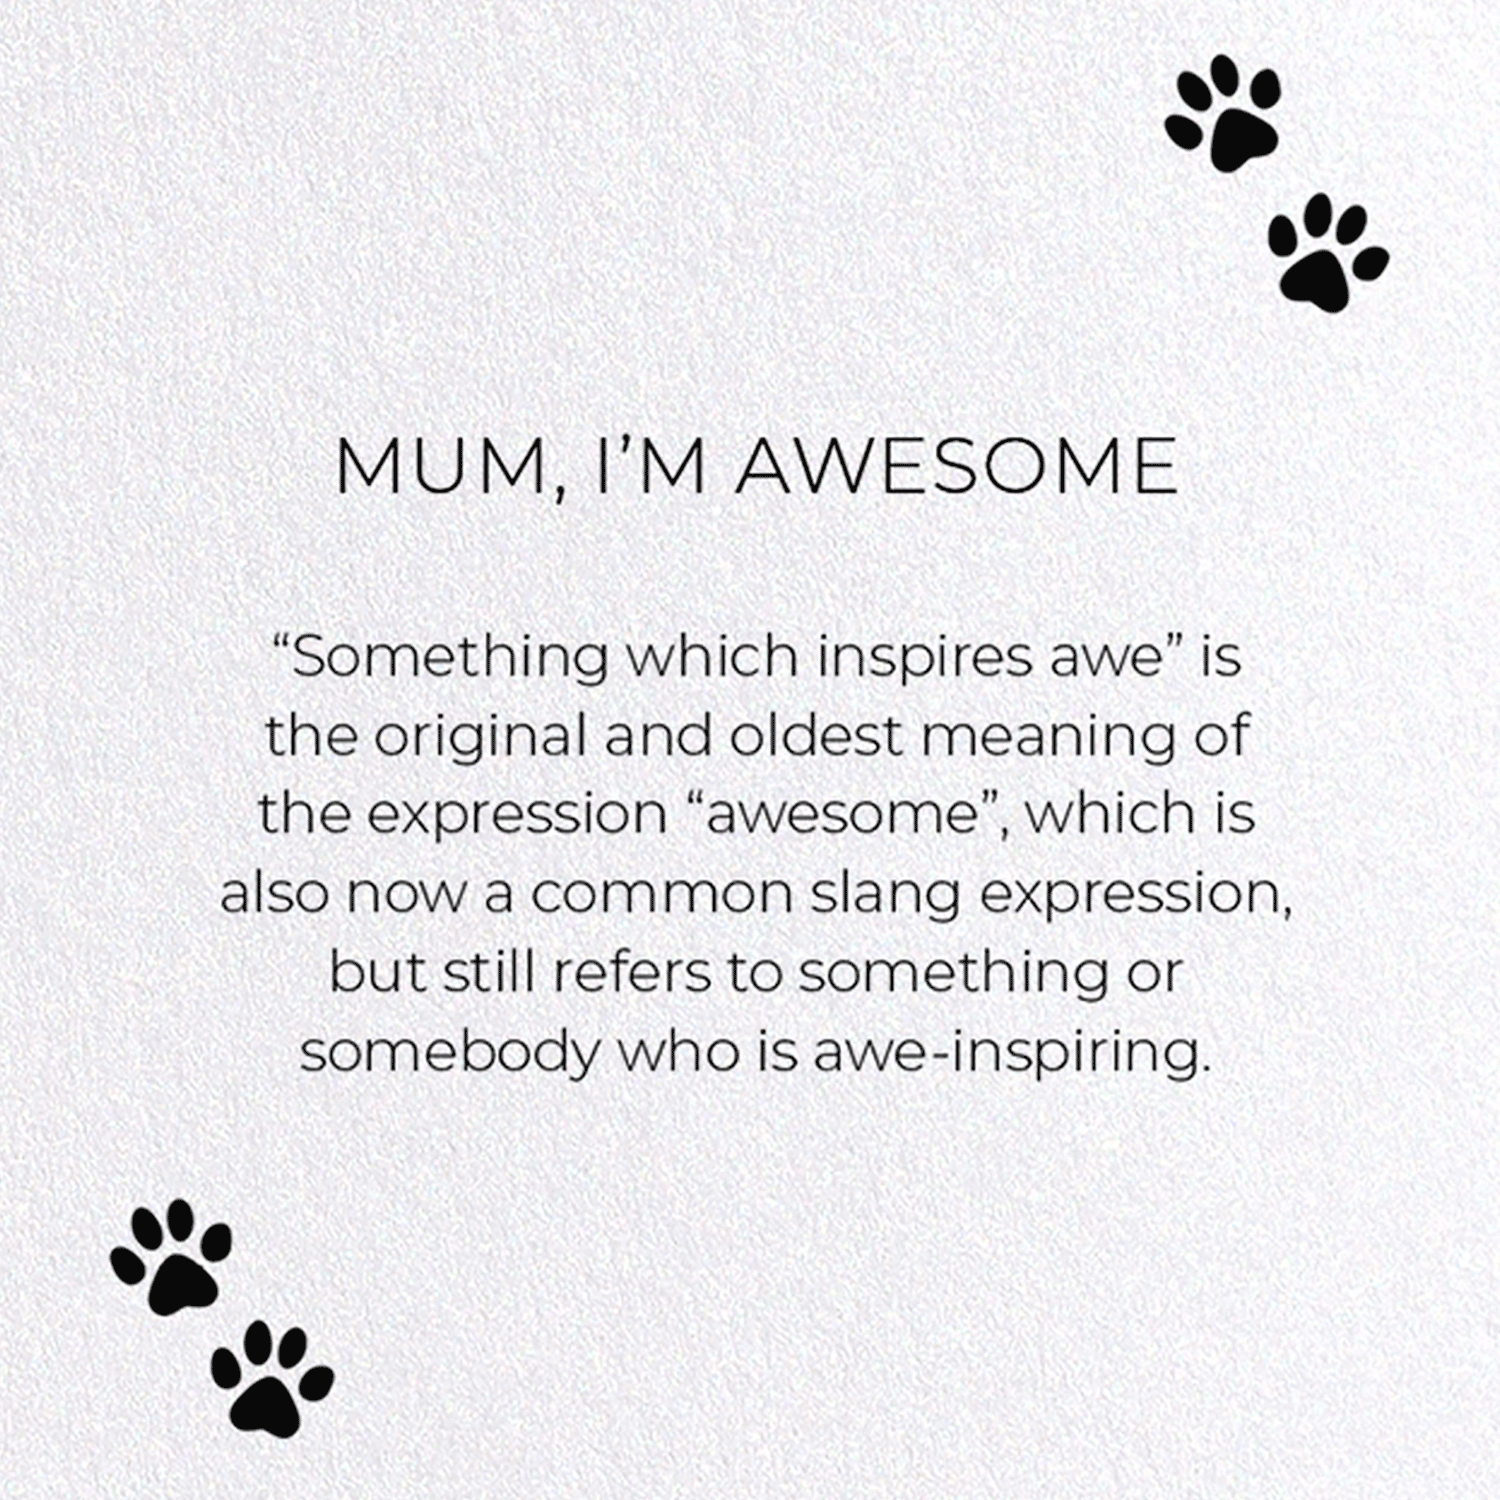 MUM, I'M AWESOME: Funny Animal Greeting Card